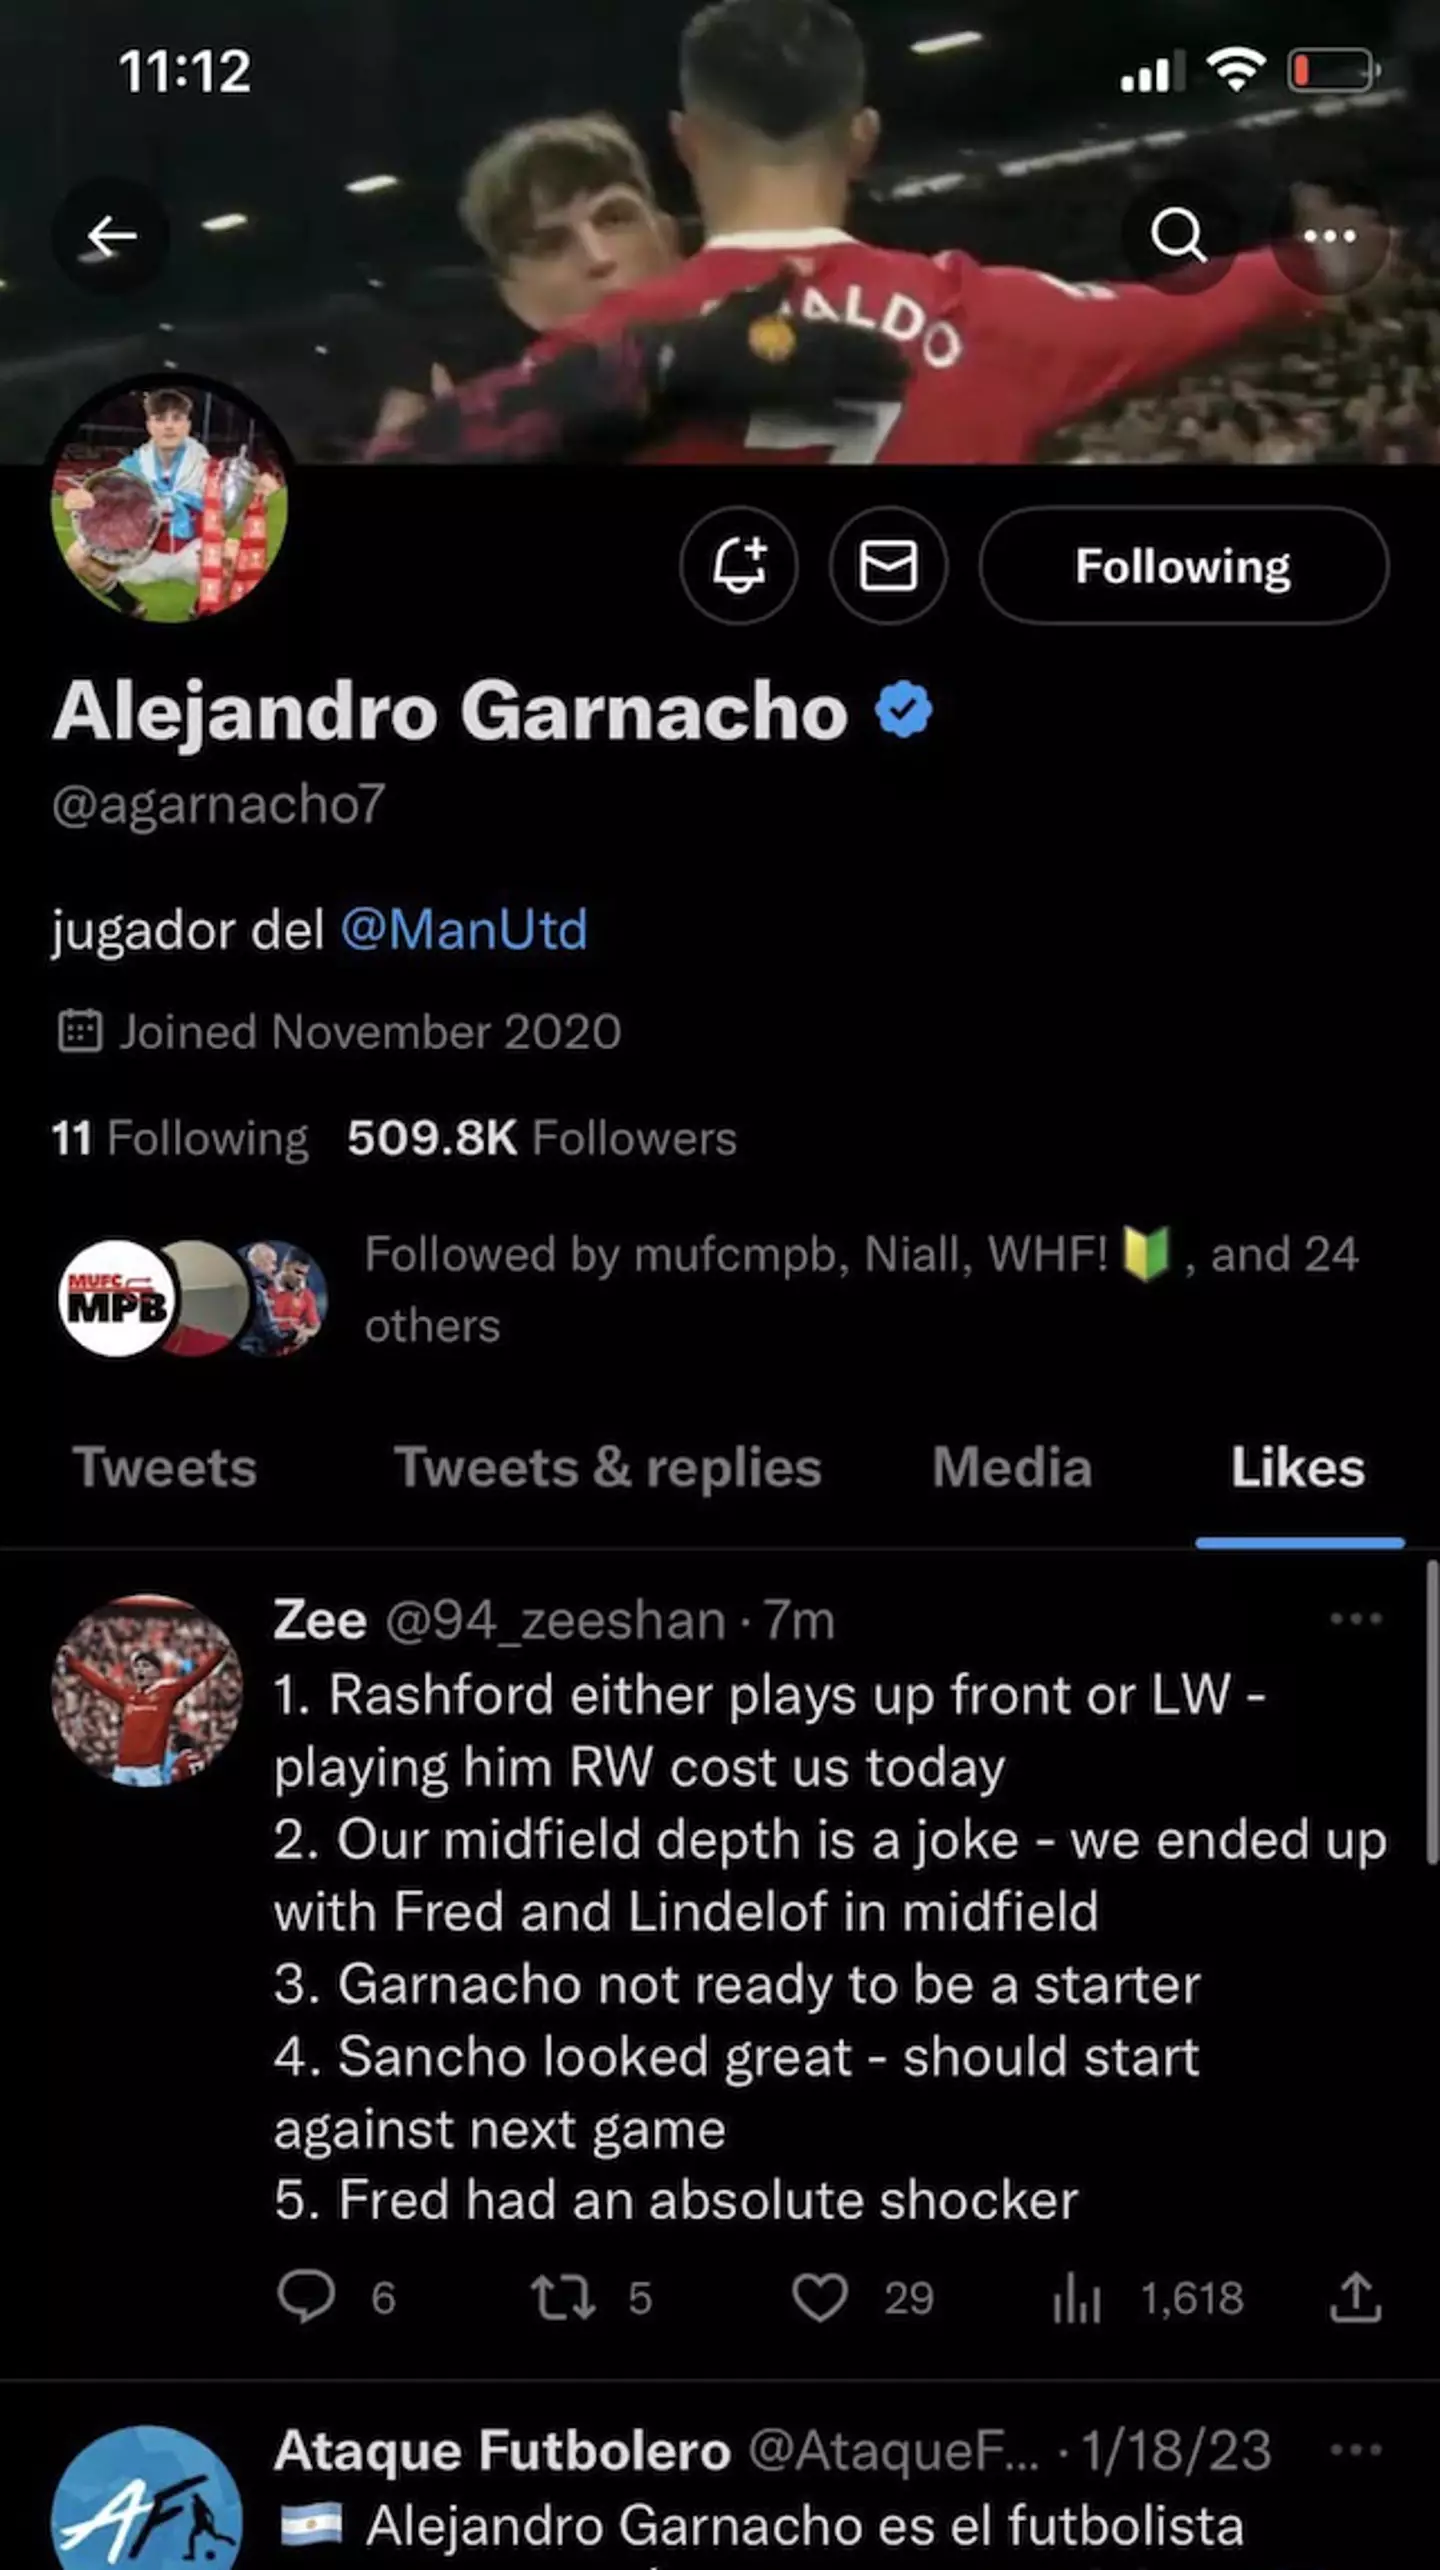 Garnacho's liked tweet. Image: Twitter